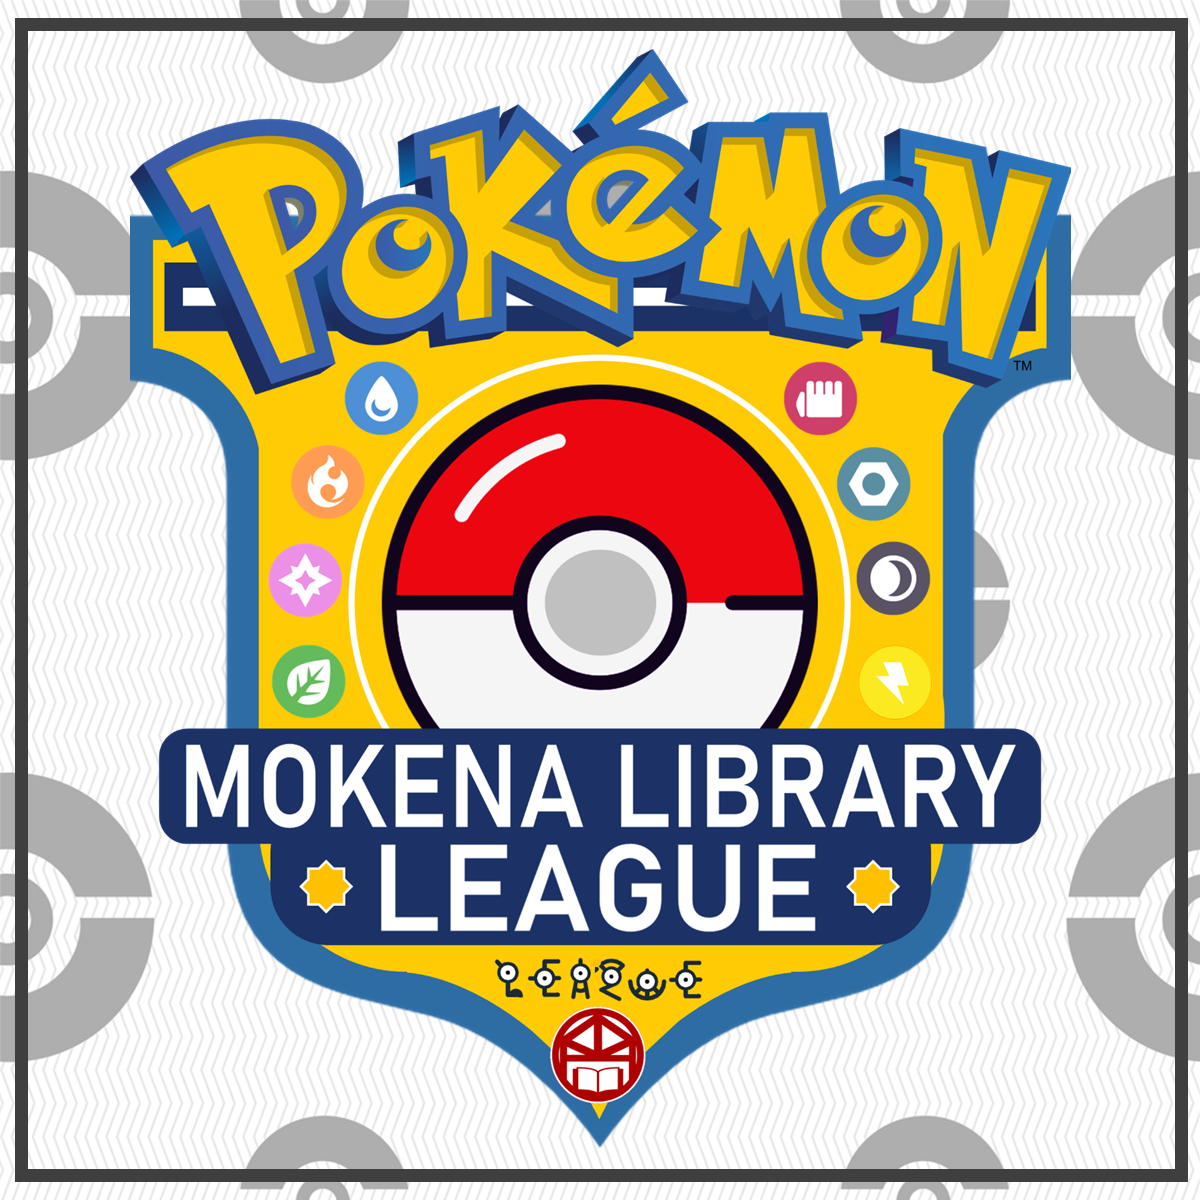 Image of Pokémon Library League logo.